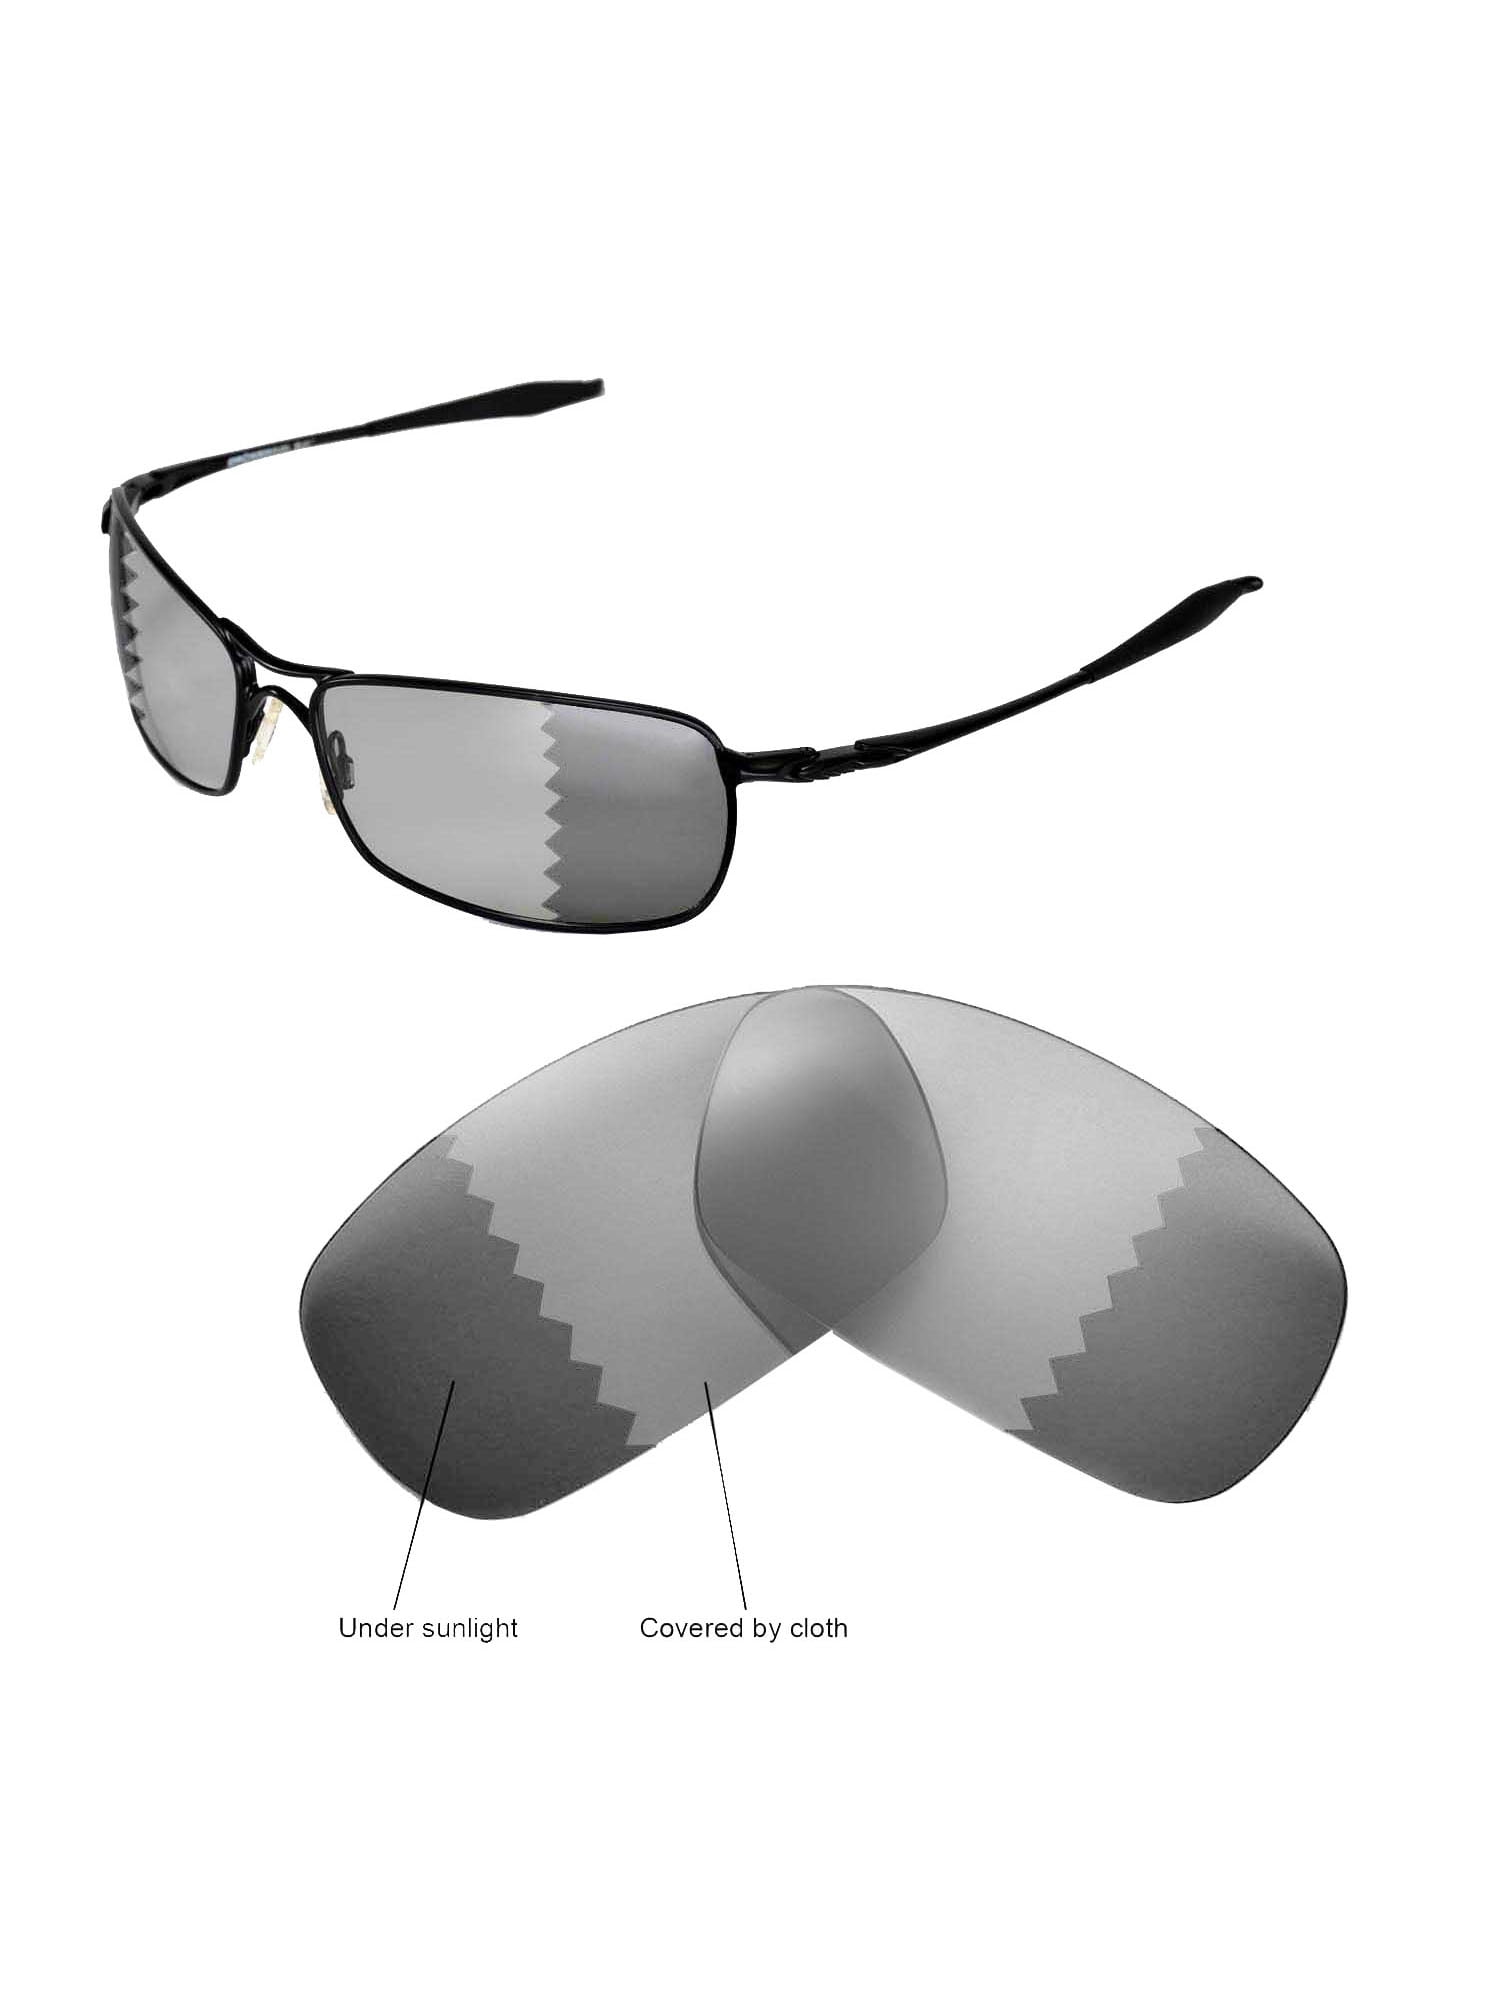 oakley crosshair 2.0 replacement lenses